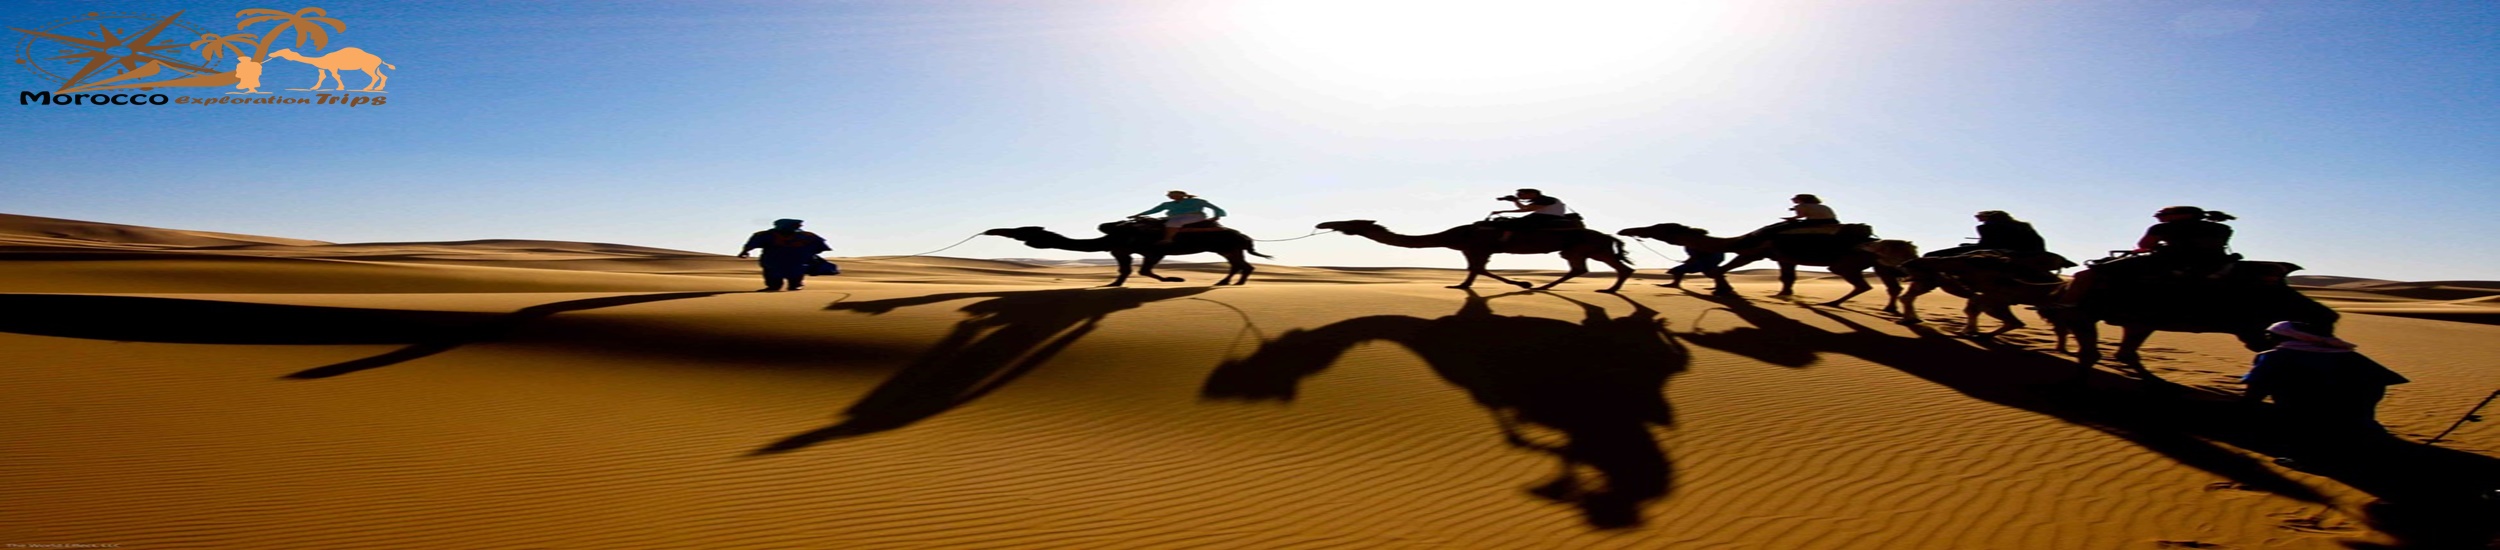 Camel rides in Morocco desert